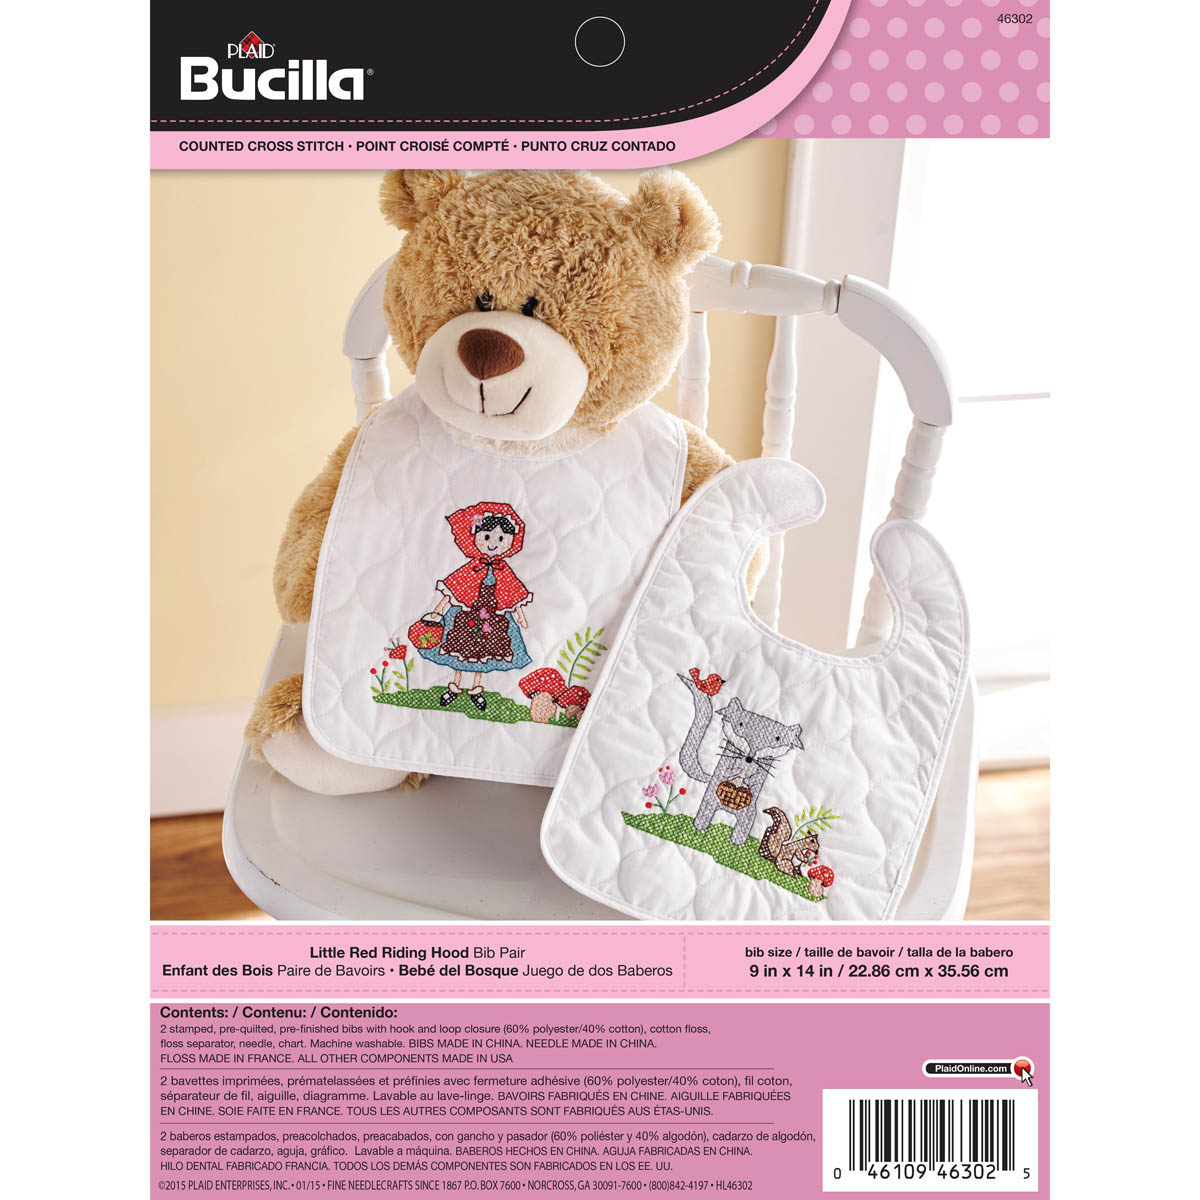 Bucilla ® Baby - Stamped Cross Stitch - Crib Ensembles - Little Red Riding Hood - Bib Pair Kit - 463